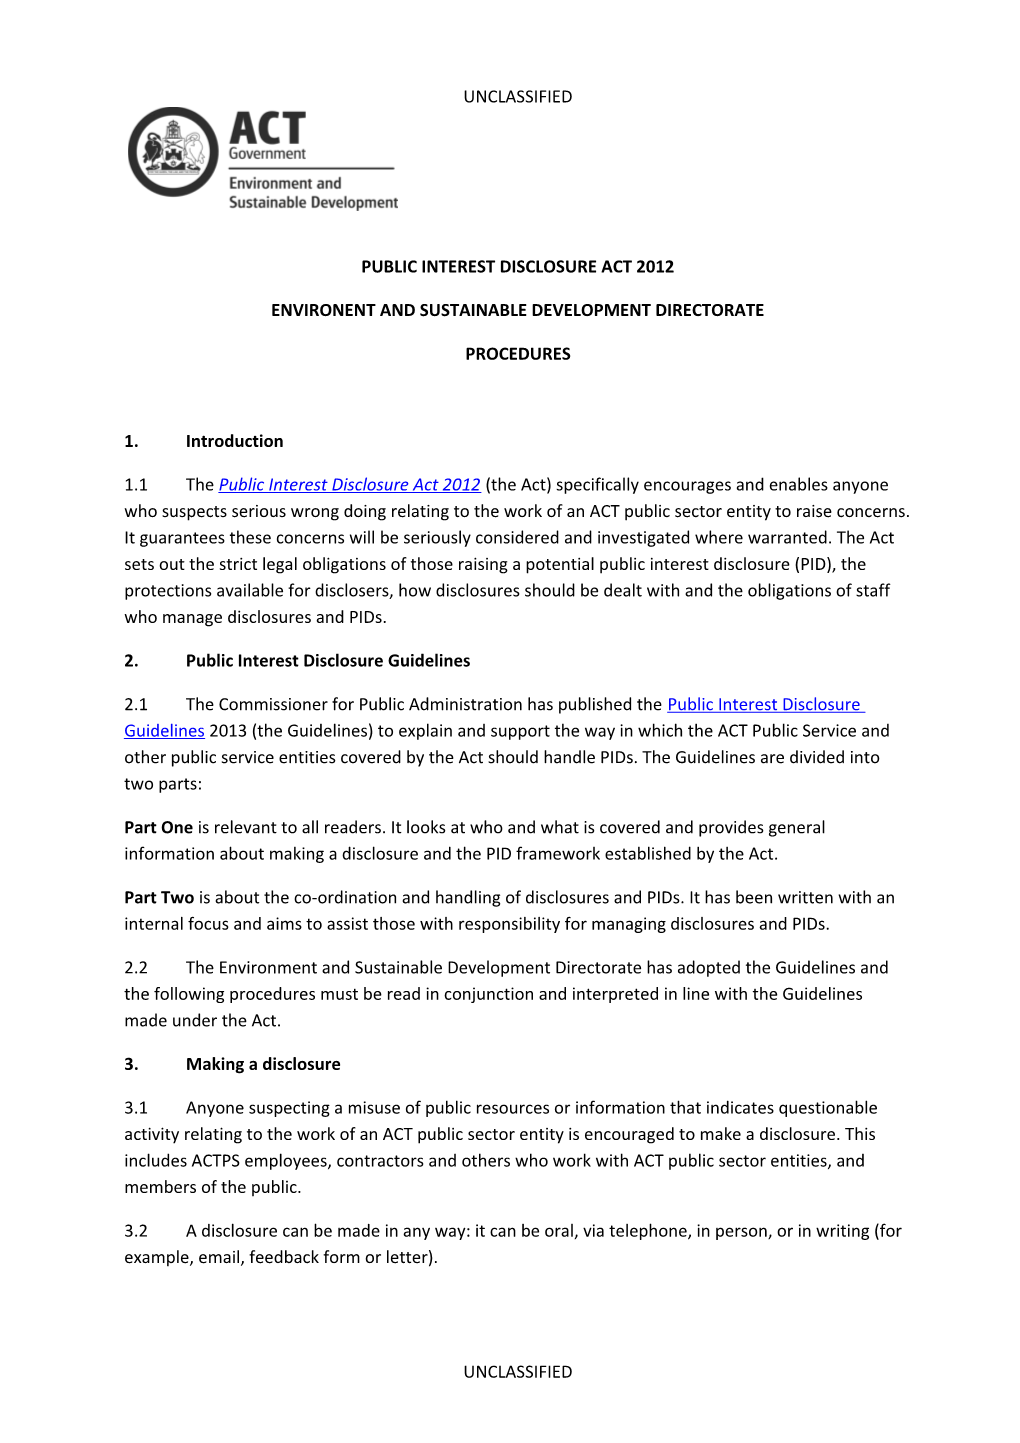 Environment and Sustainable Development Directorate Public Interest Disclosure Procedures